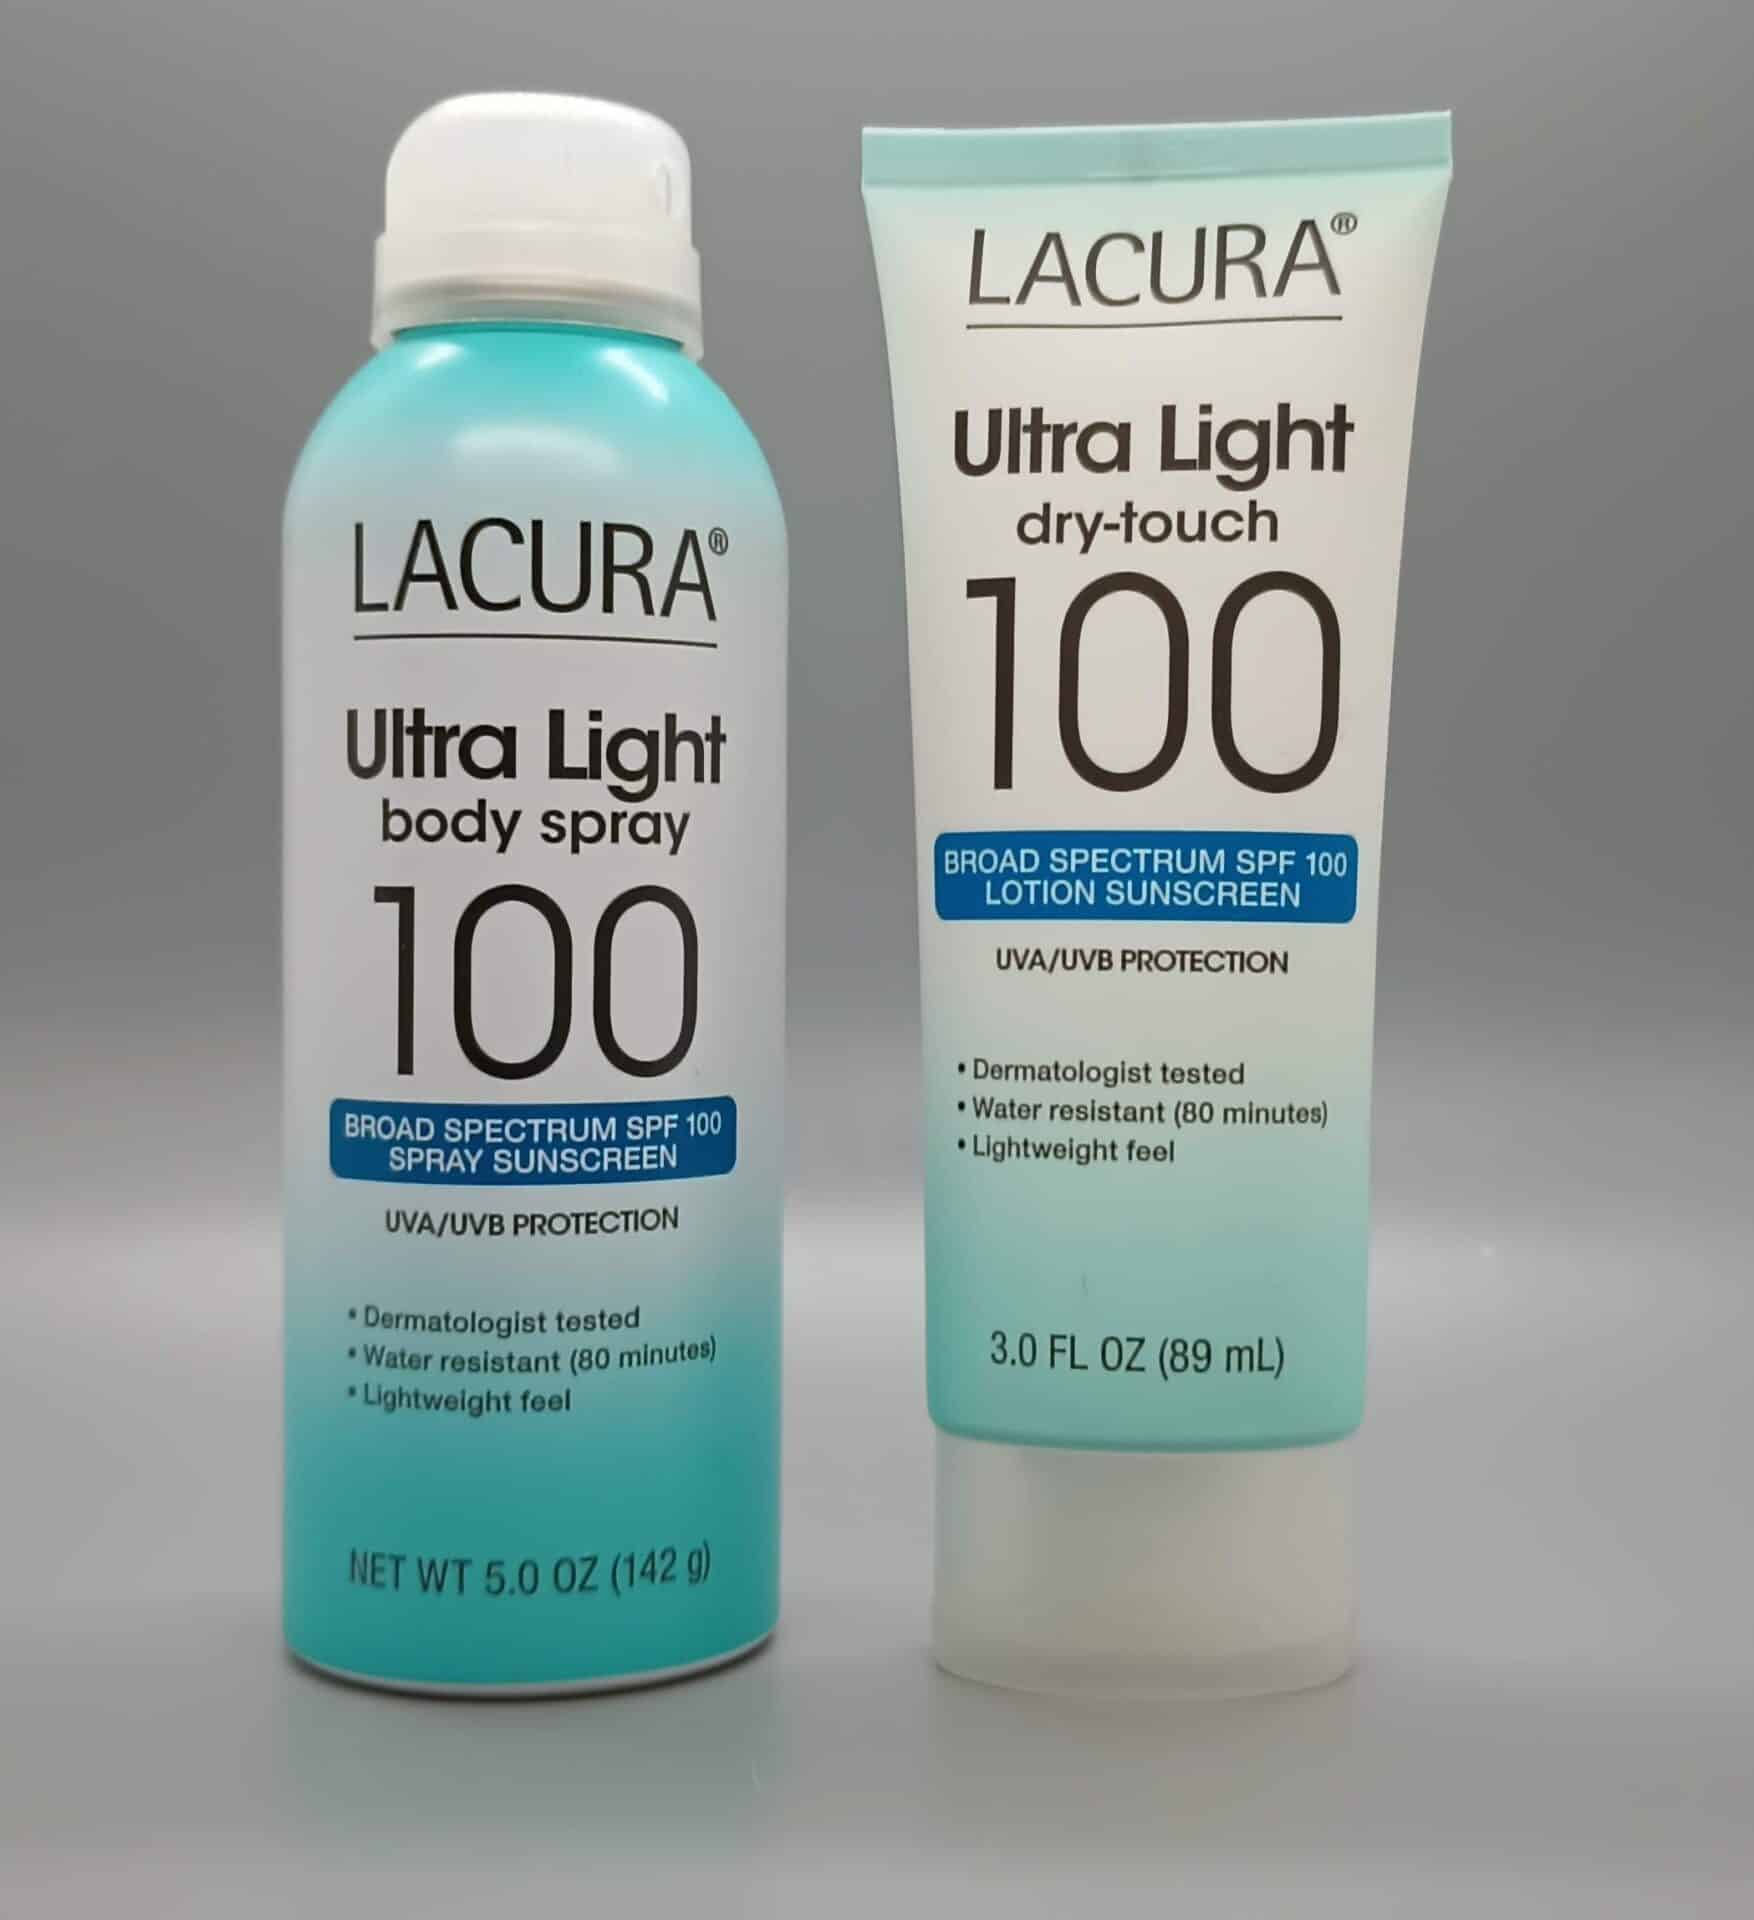 Lacura Ultra Light Sunscreen 